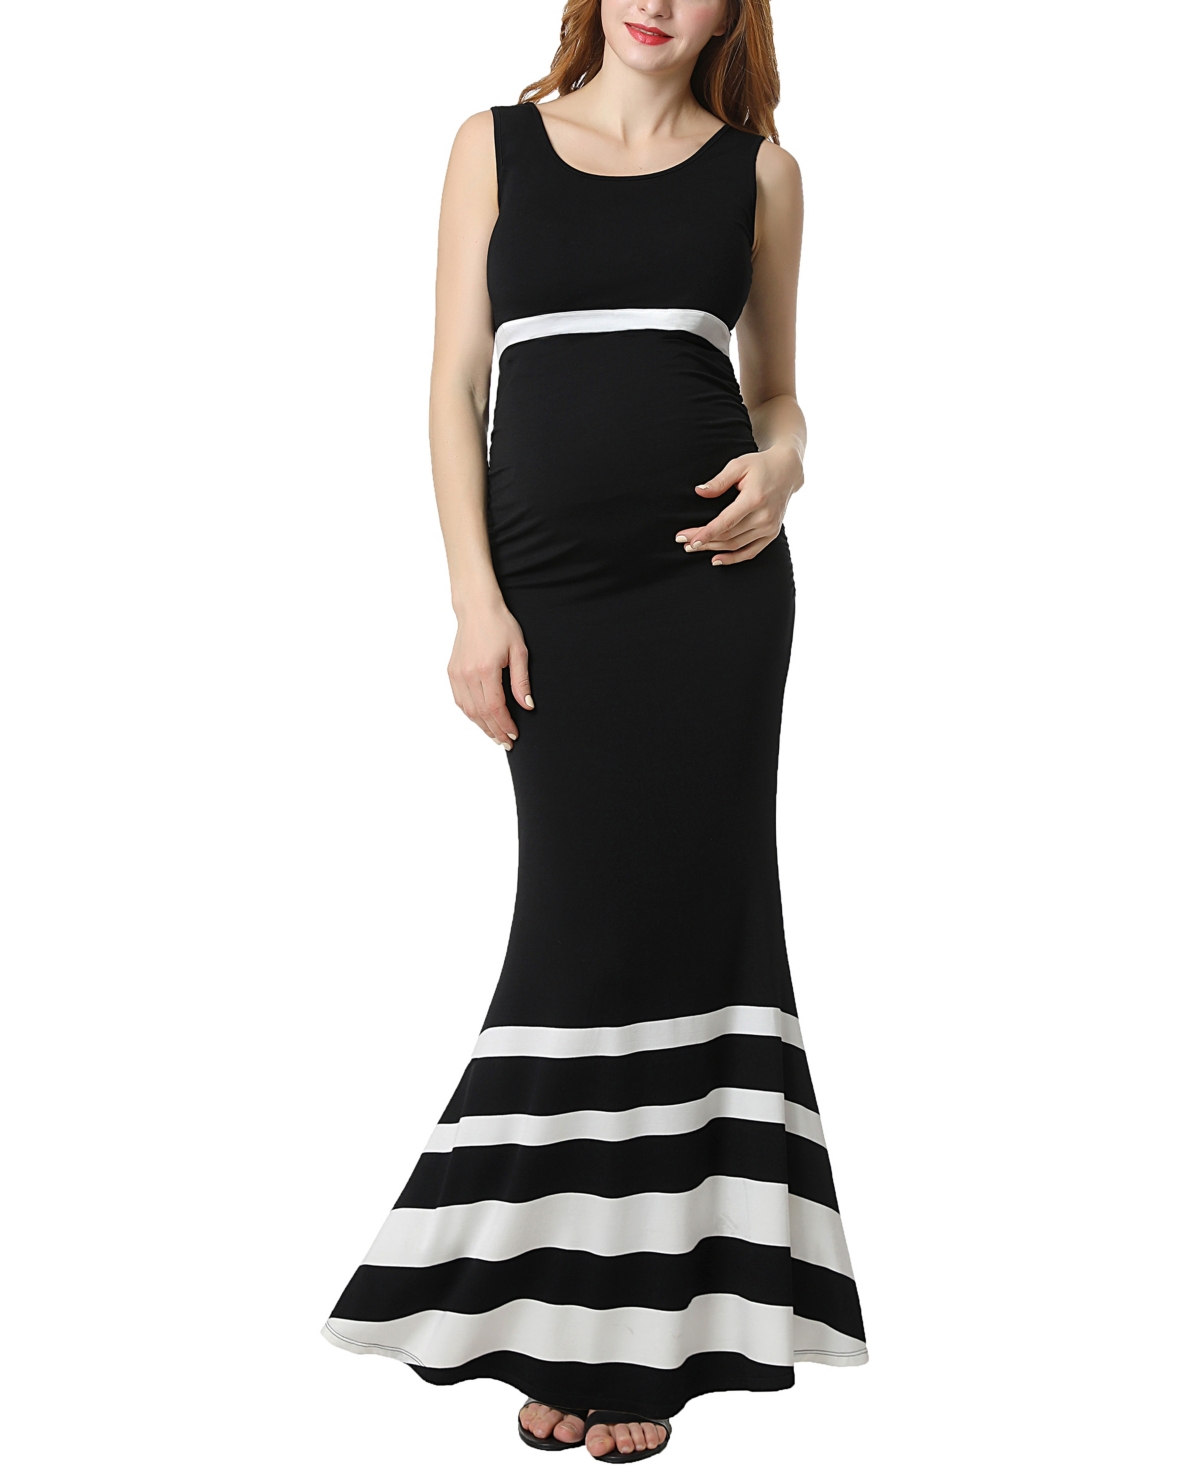 kimi + kai Maternity Colorblock Mermaid Maxi Dress - Black/white